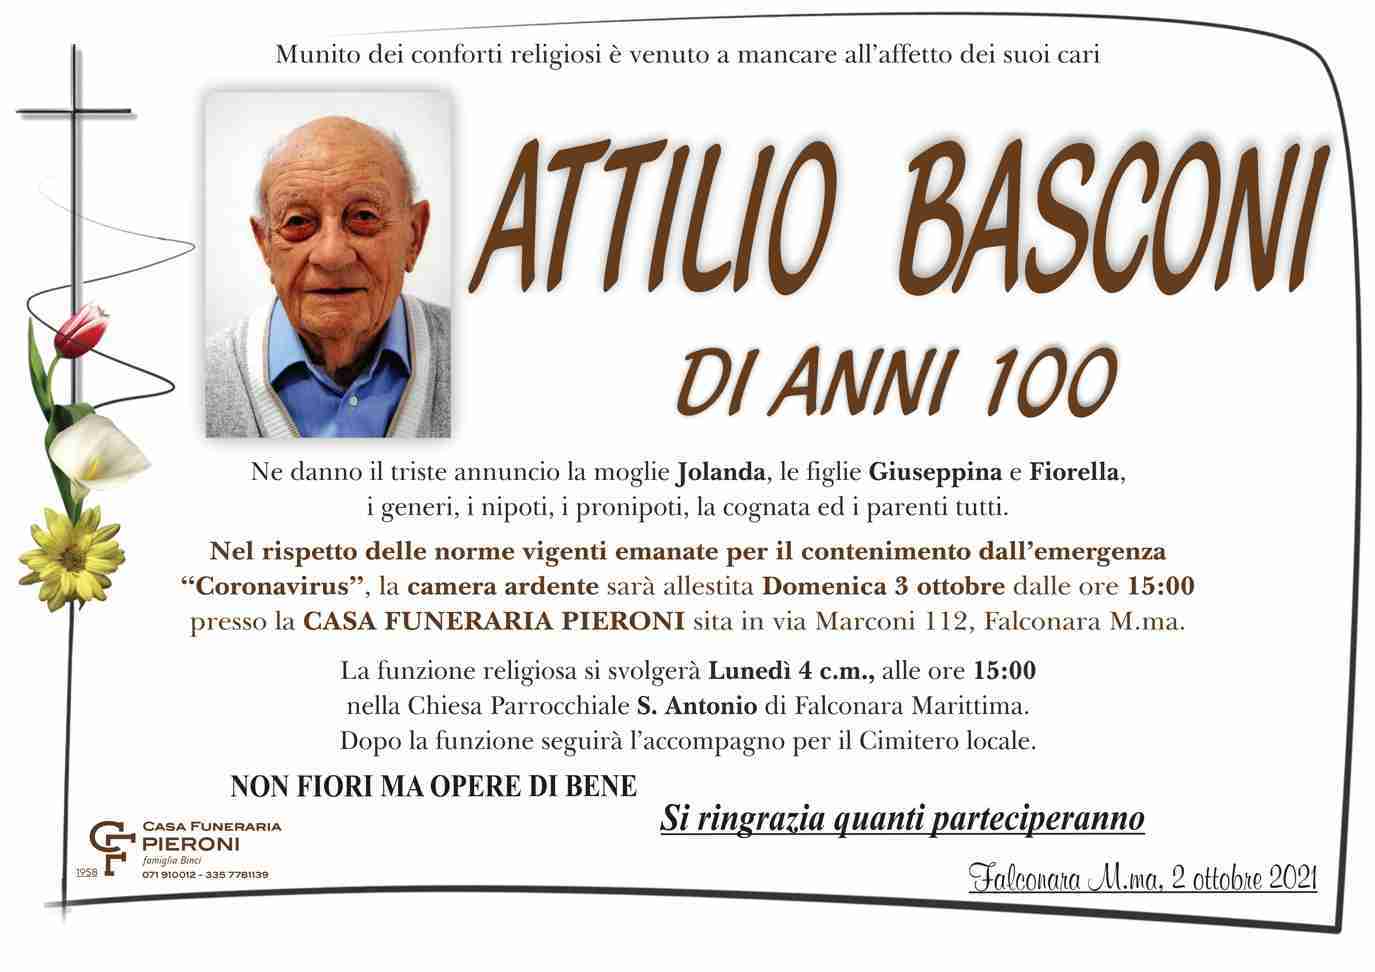 Attilio Basconi